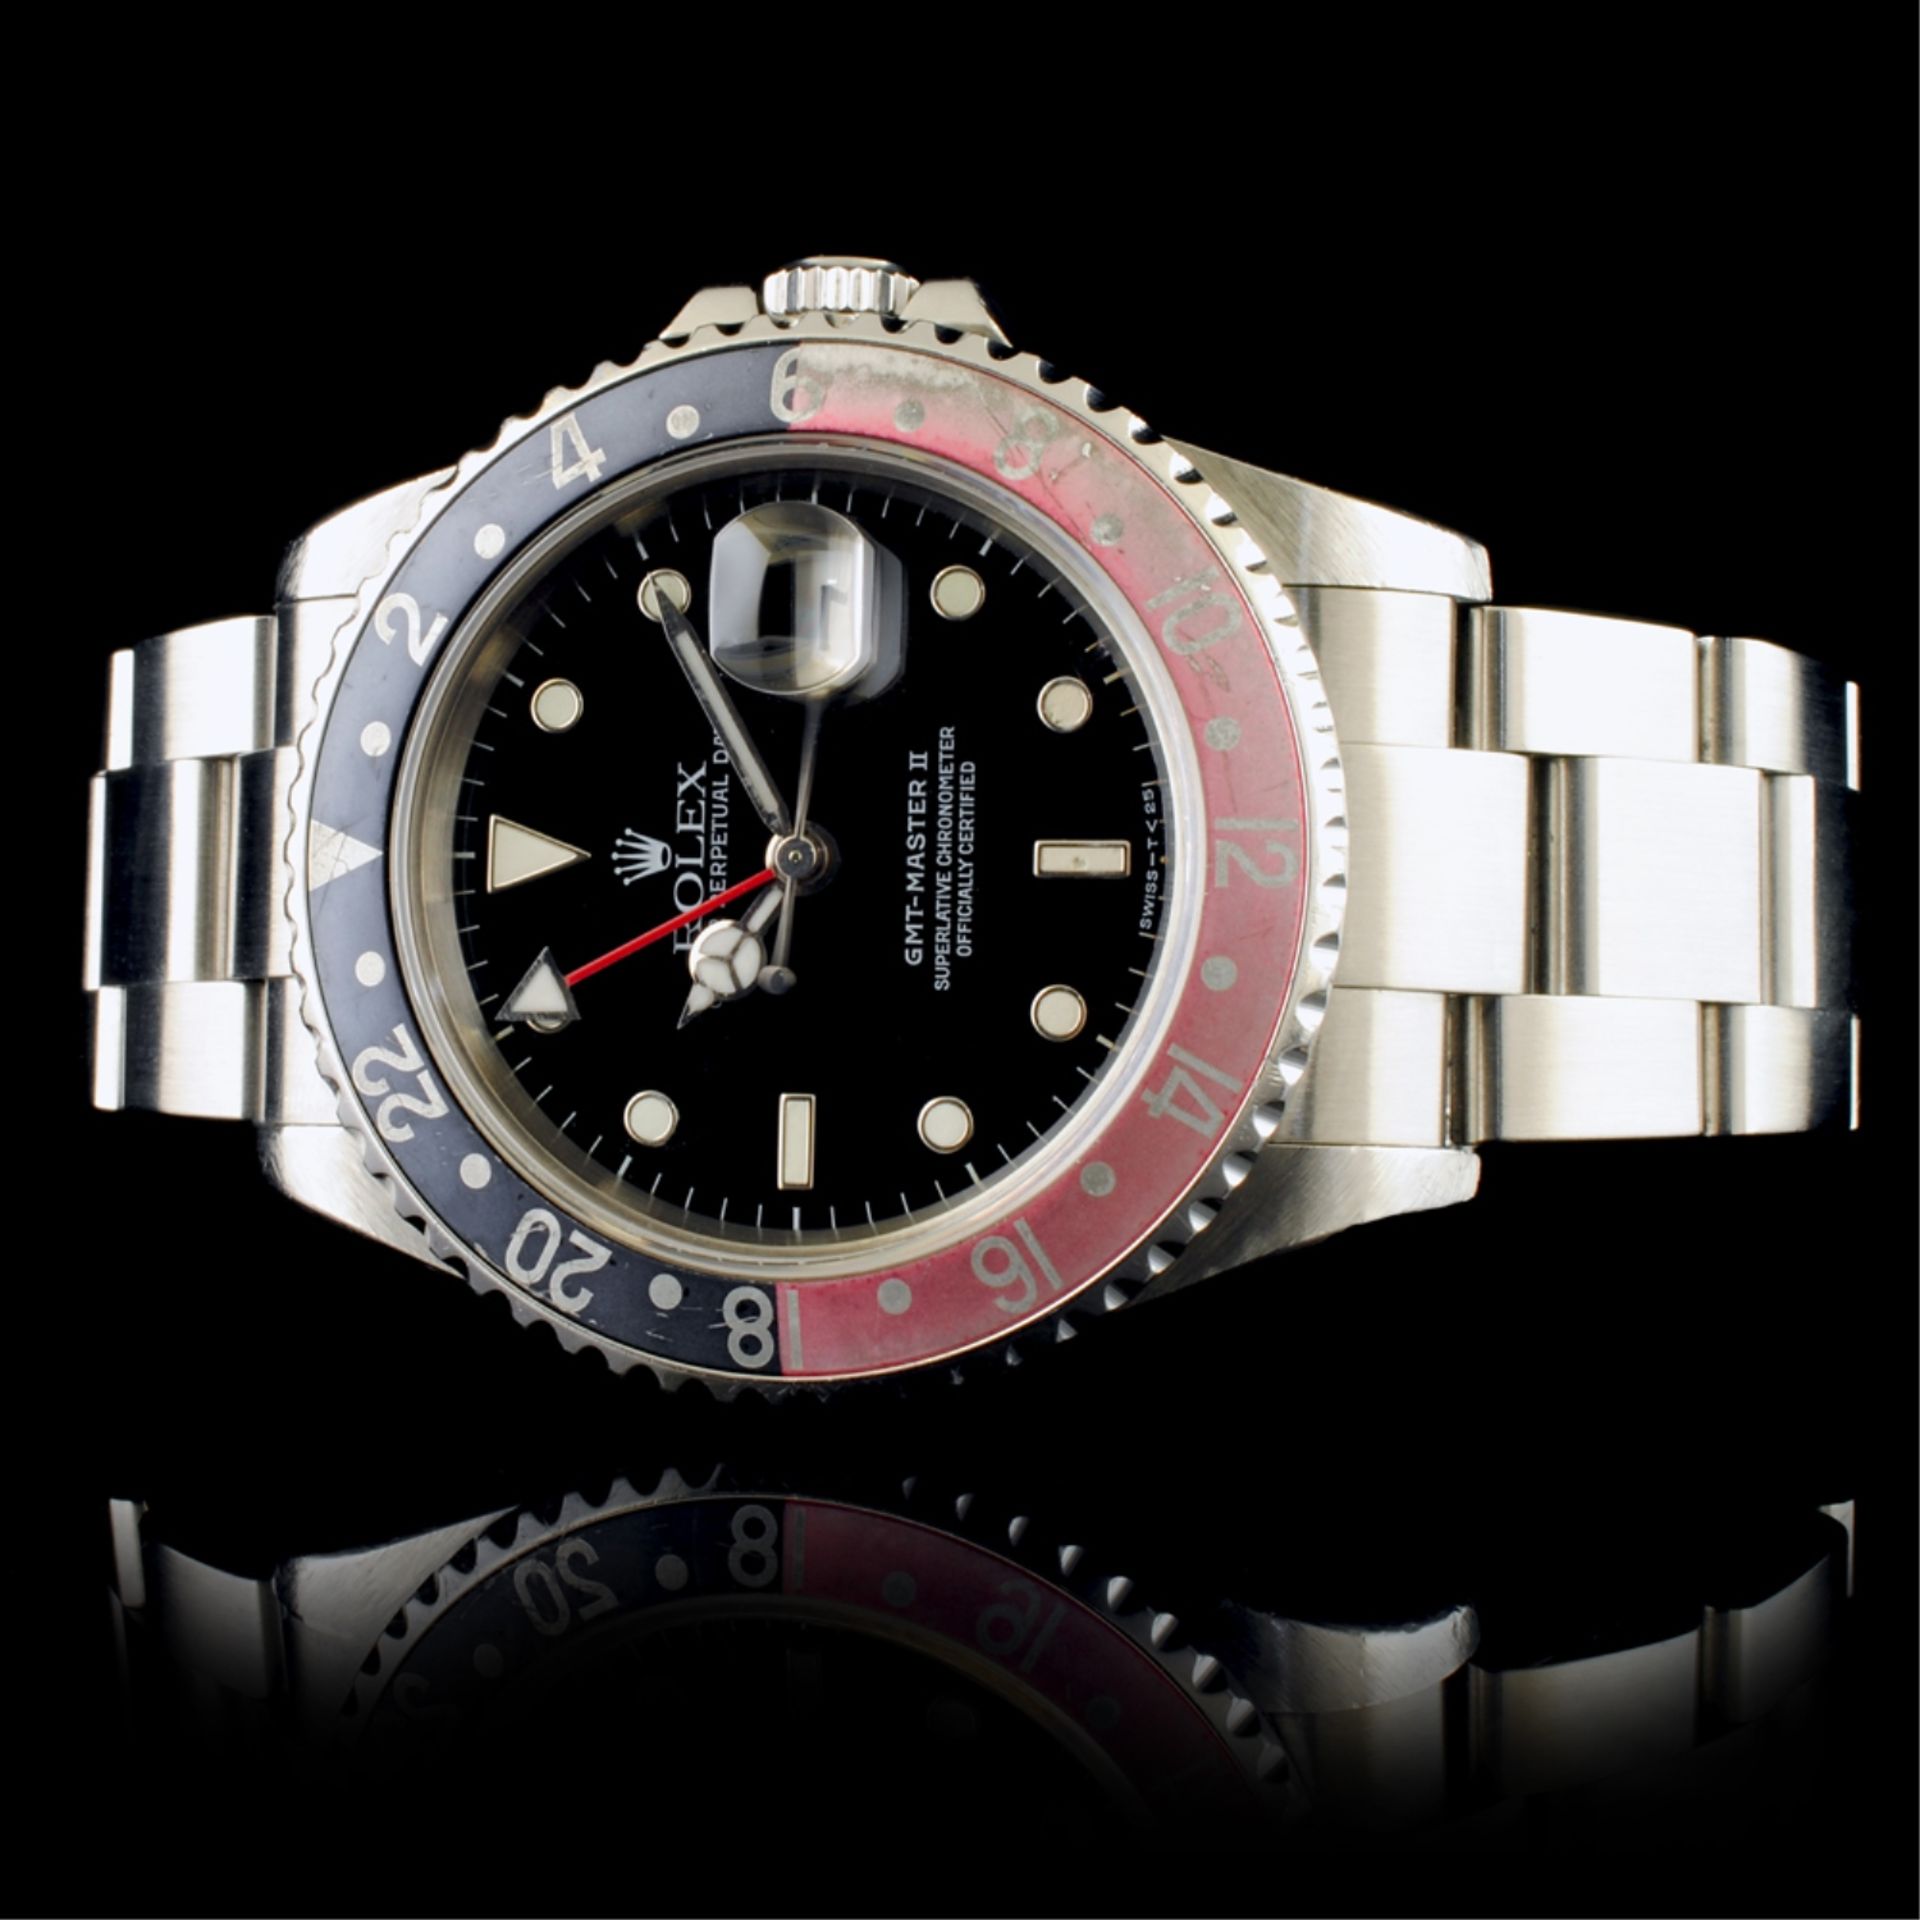 Rolex GMT-Master II â€œPepsiâ€ Stainless Steel Watch - Image 2 of 4